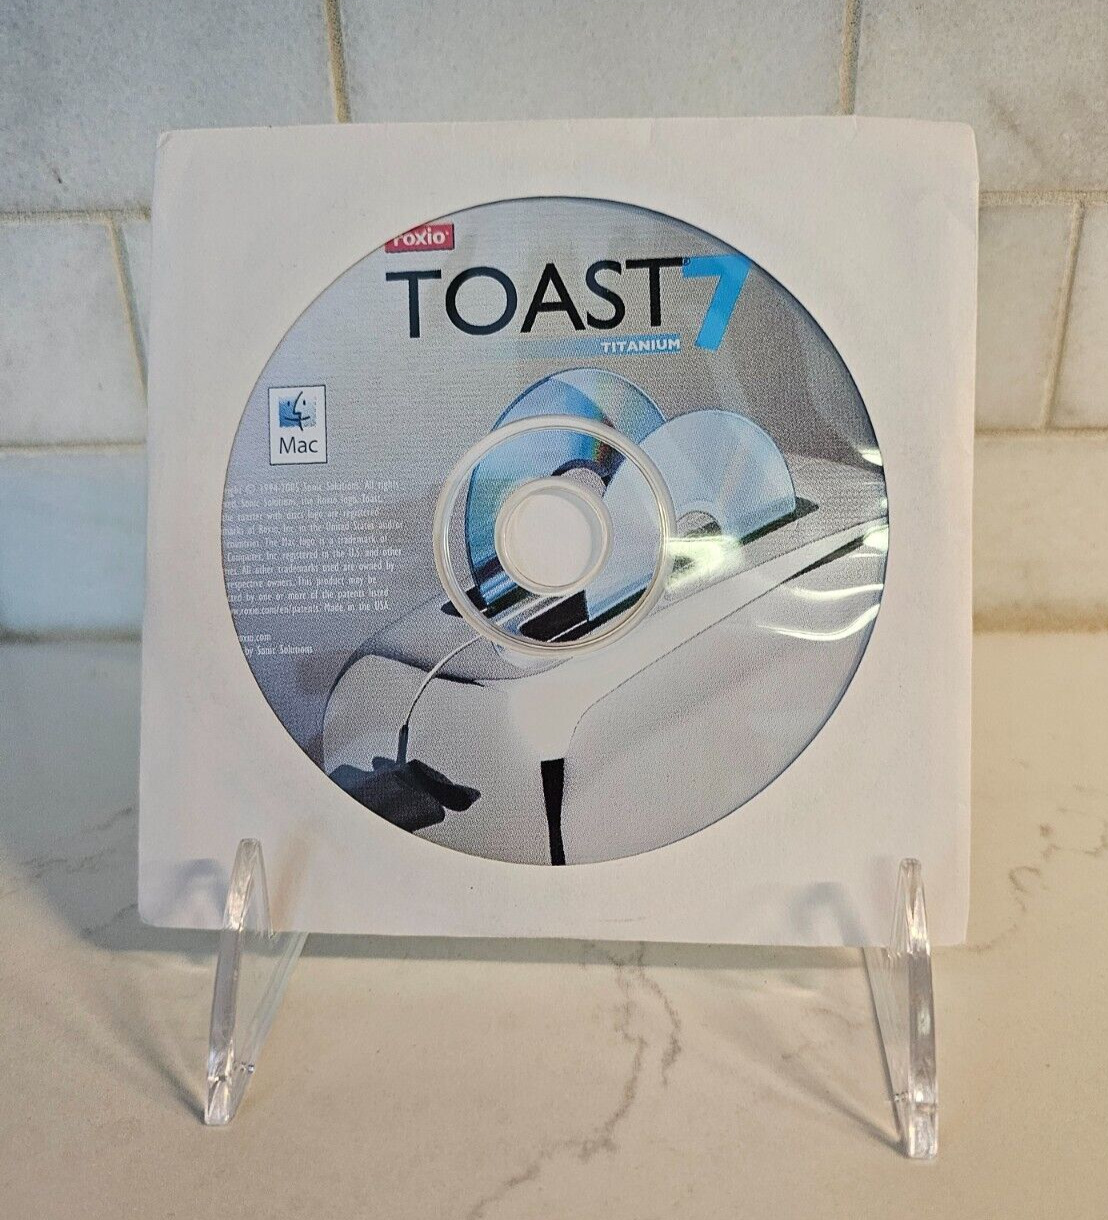 Vintage Roxio Toast 7 Titanium CD-ROM Software for Macintosh